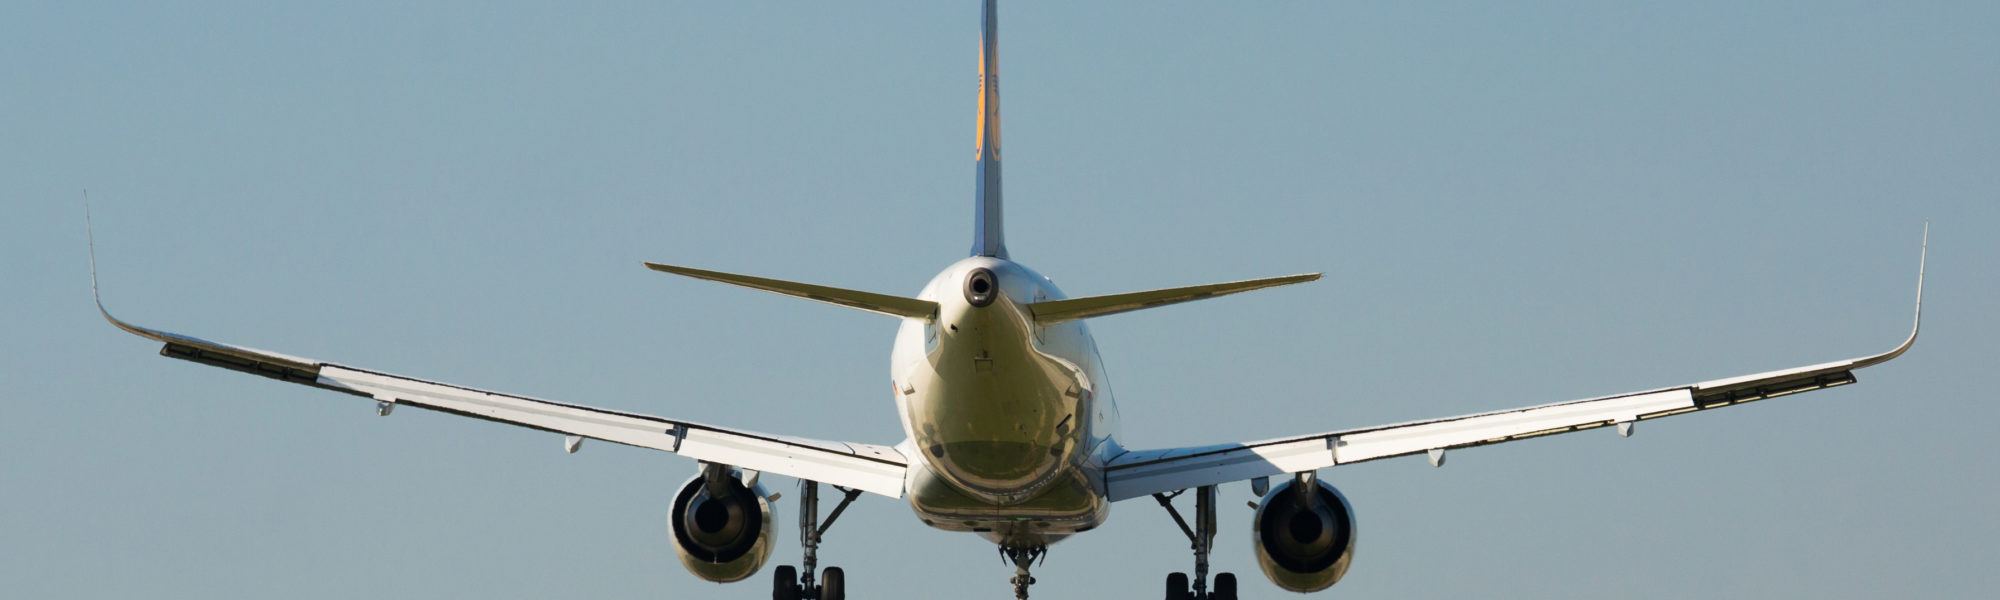 Workforce transformation - Lufthansa Airlines plane landing